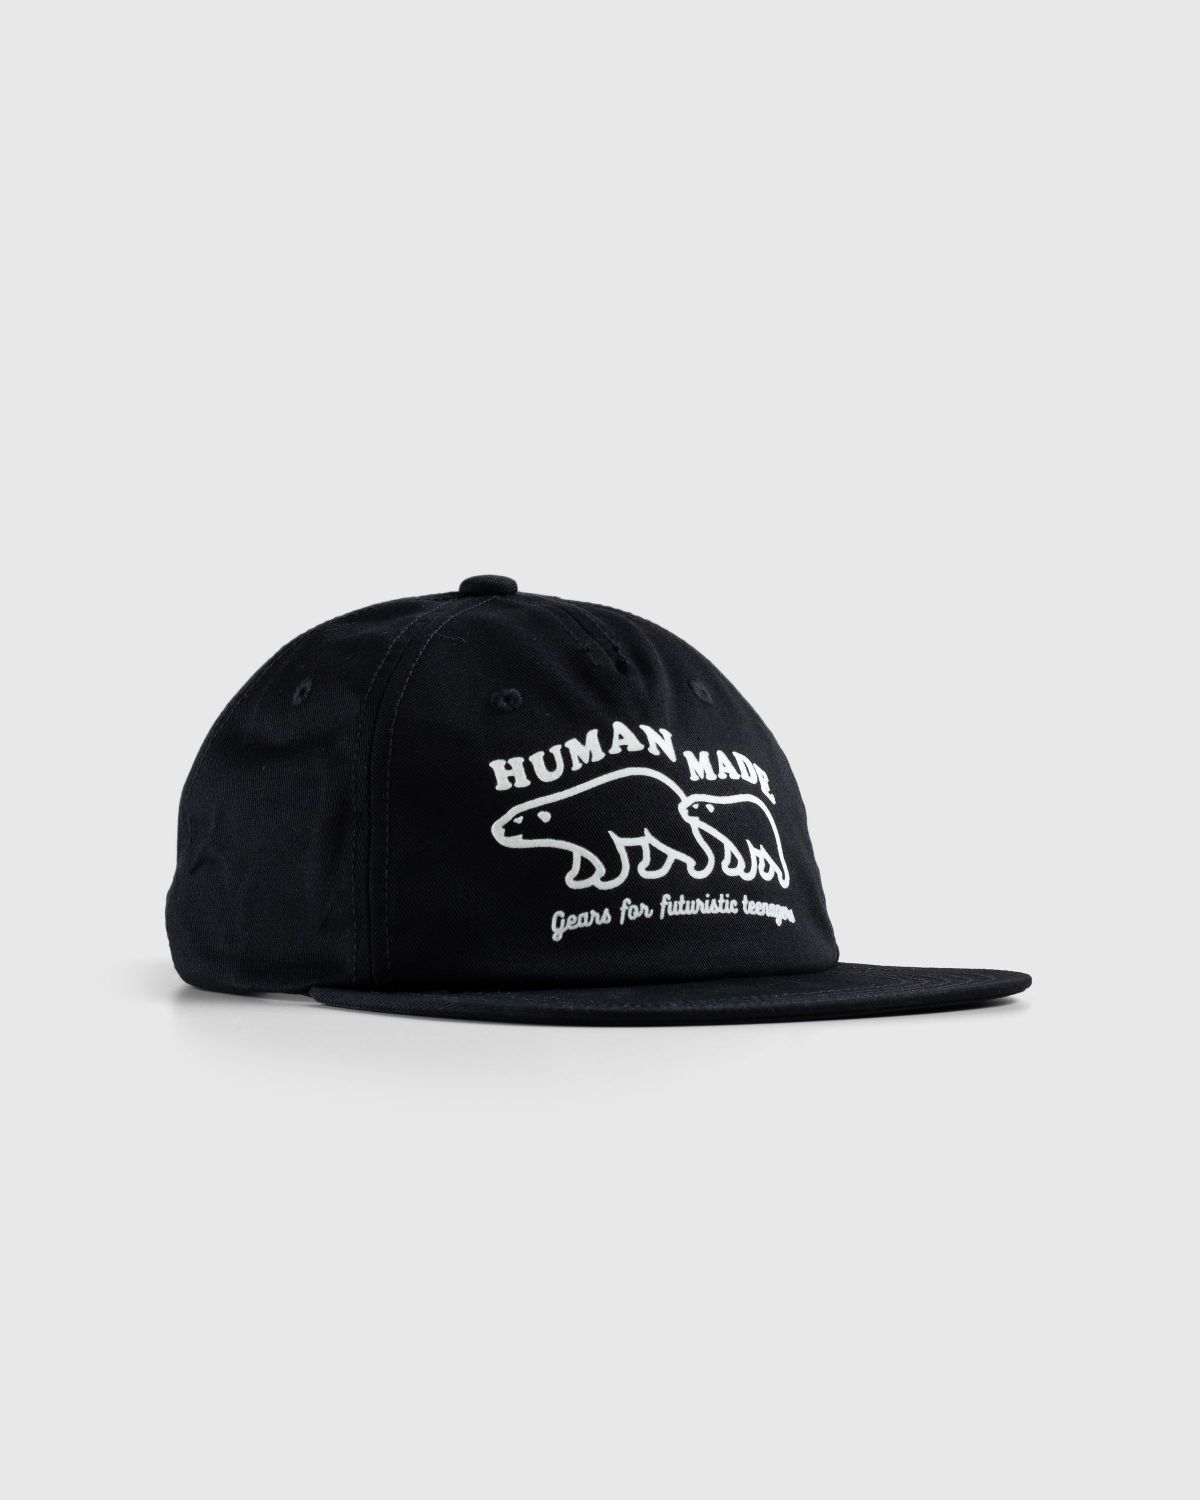 Human Made – 5 PANEL CAP #2 Black | Highsnobiety Shop